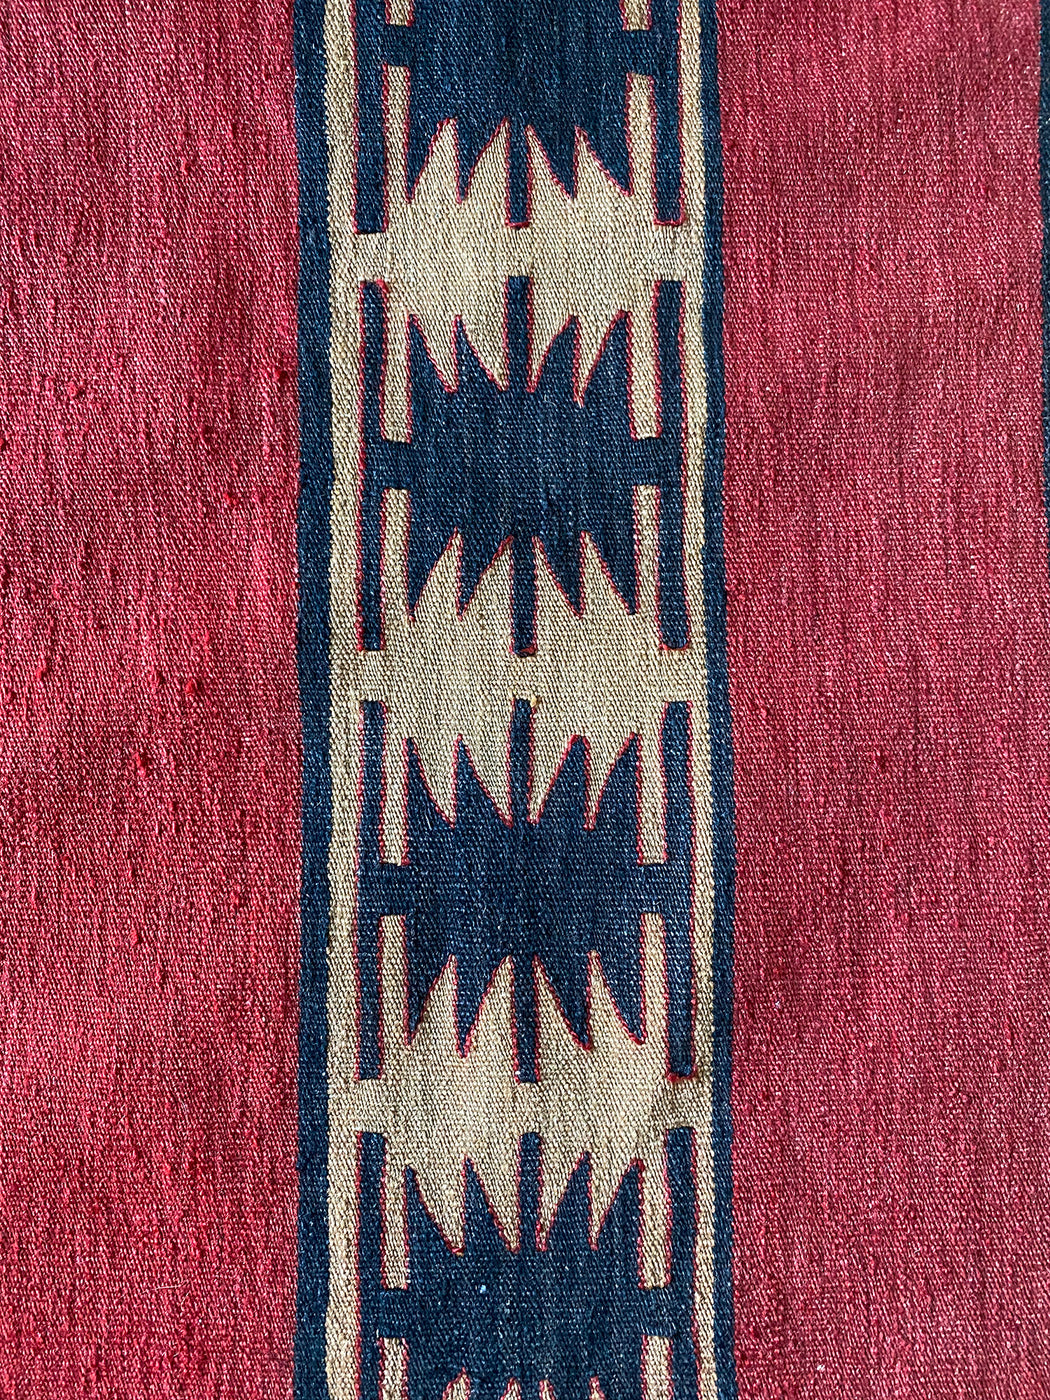 3’ 2” x 4’ 5” Vintage Turkish Kilim Rug | Red and Black Flat Weave Stripe Rug